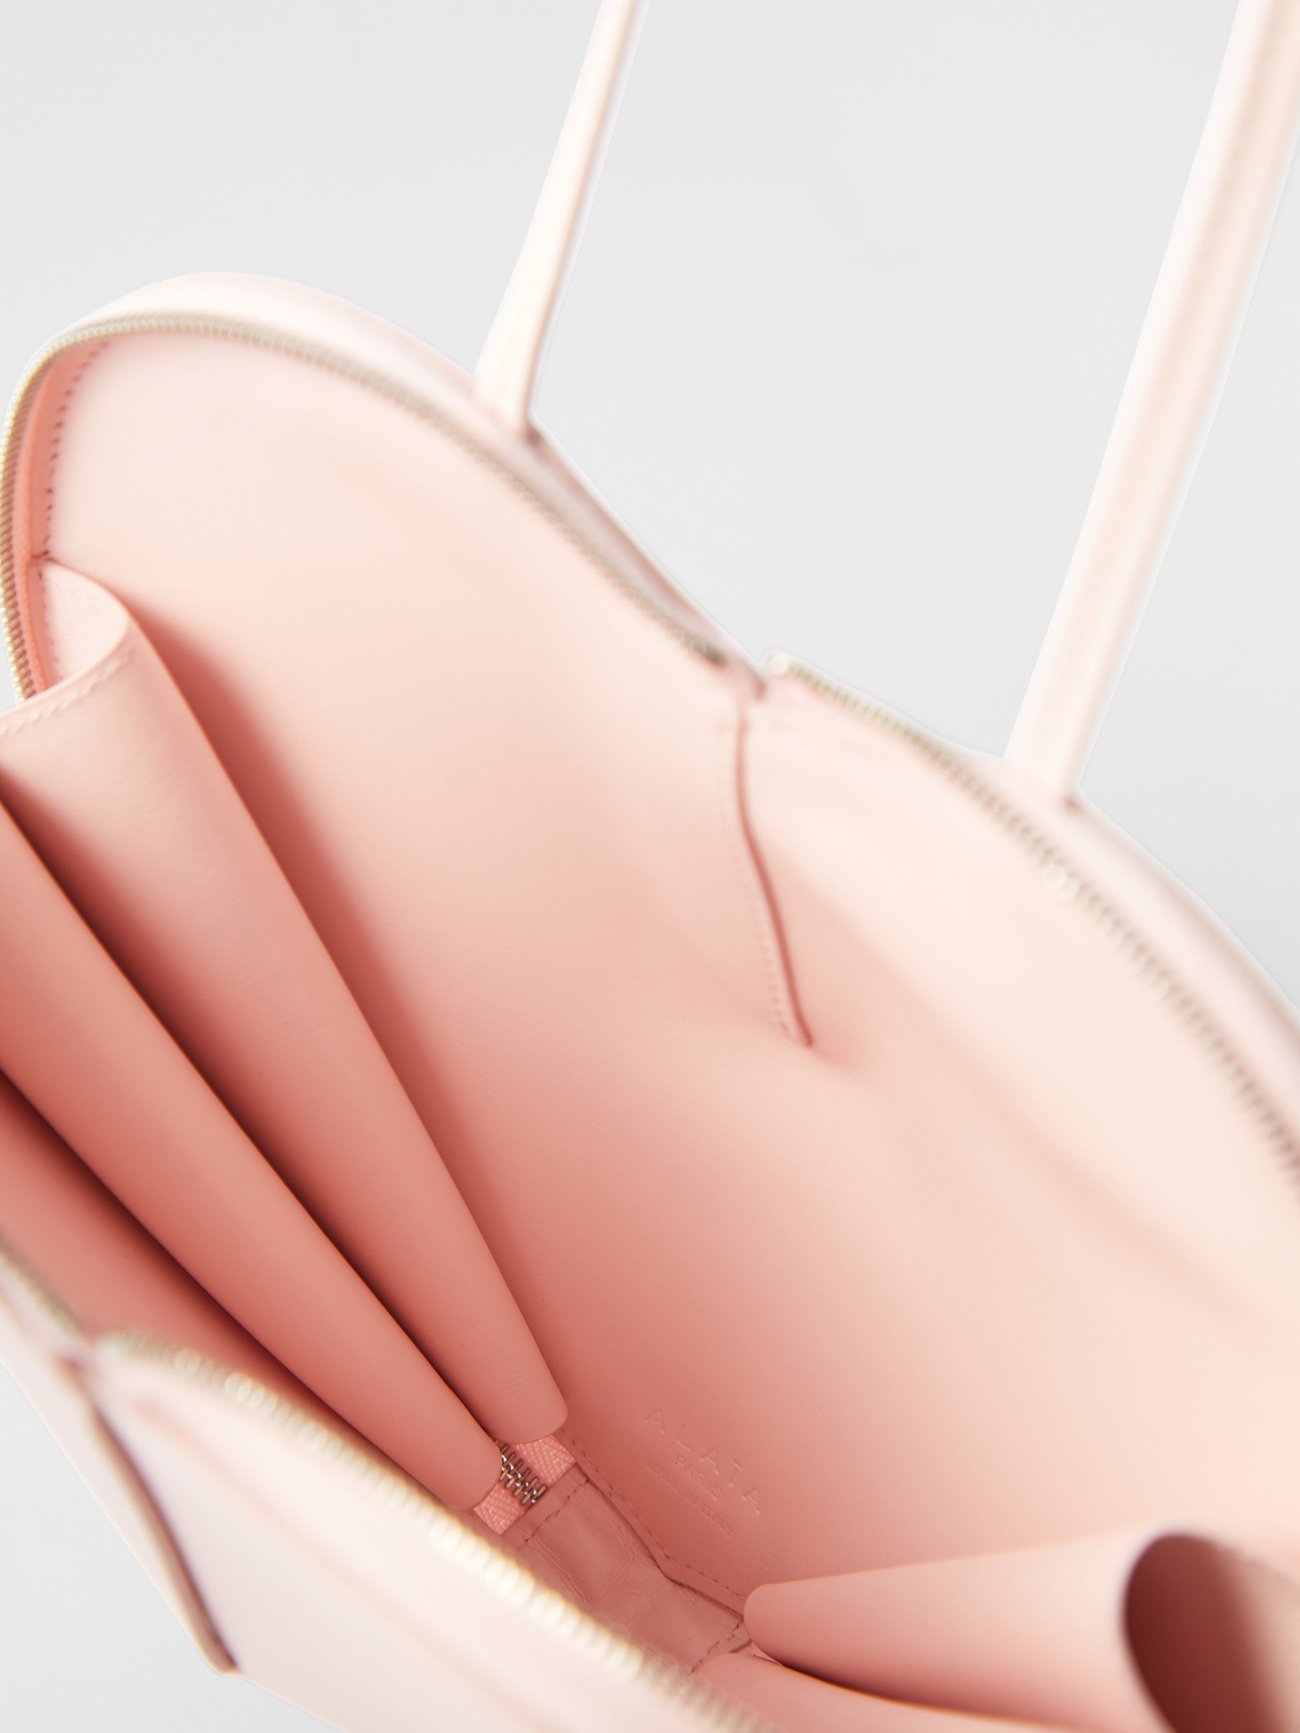 Alaïa - Le Cœur Leather Cross-body Bag - Womens - Light Pink